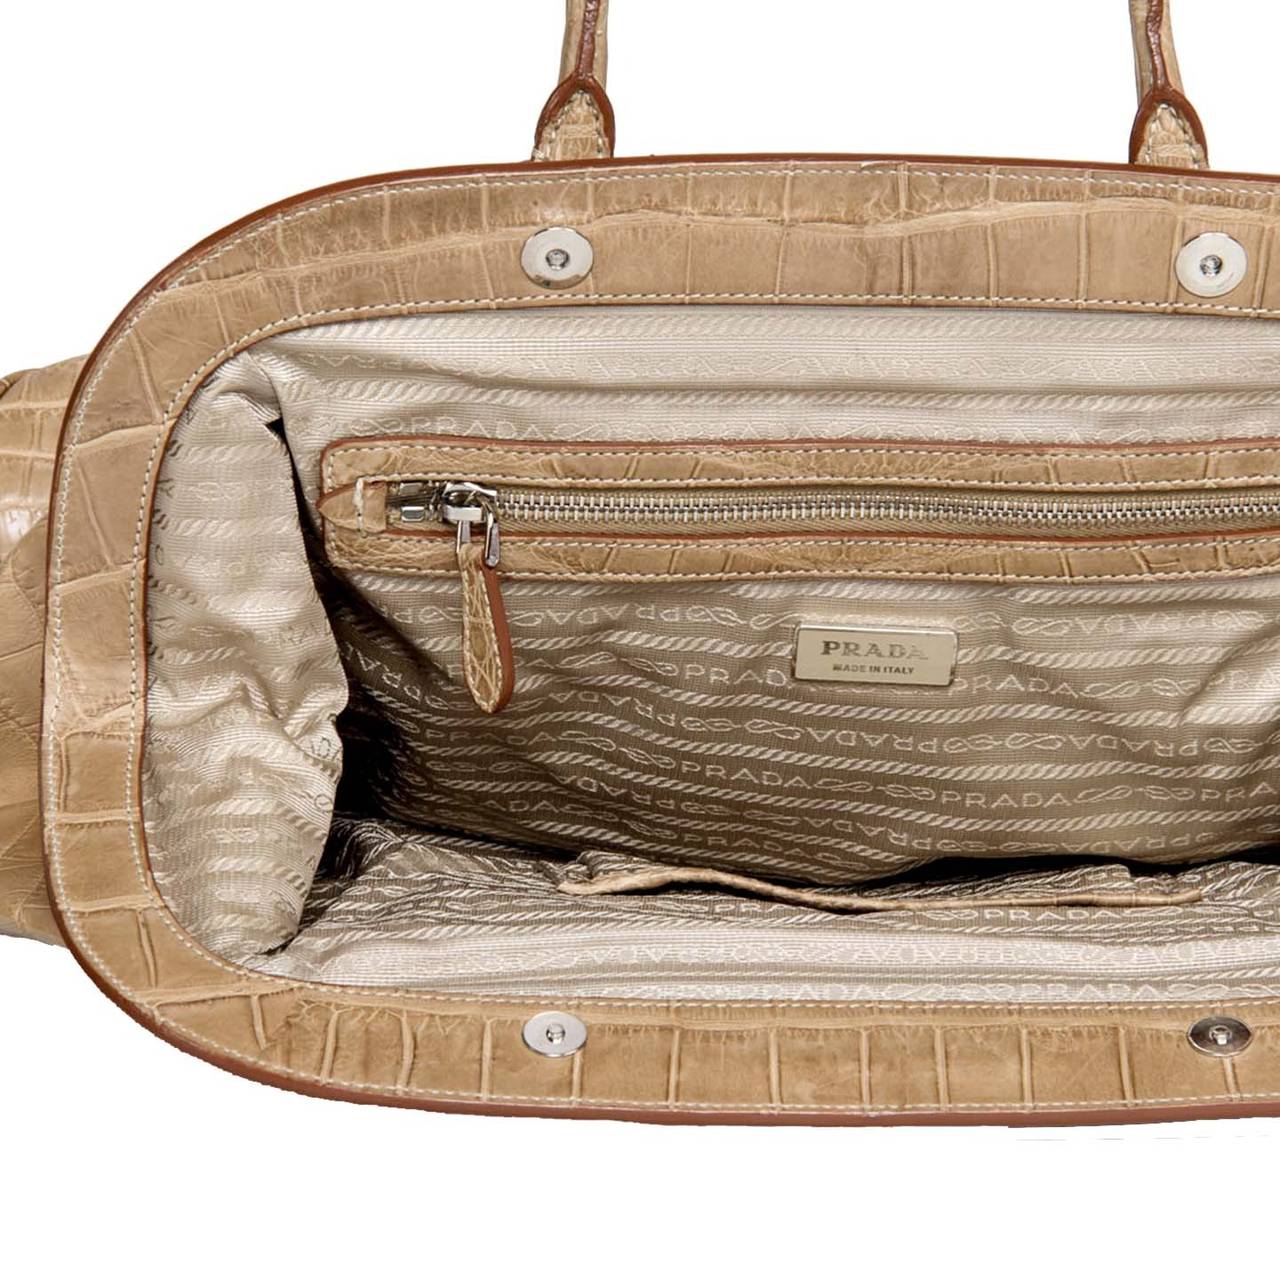 Prada Light brown crocodile bag with a vintage classic design For Sale at 1stdibs